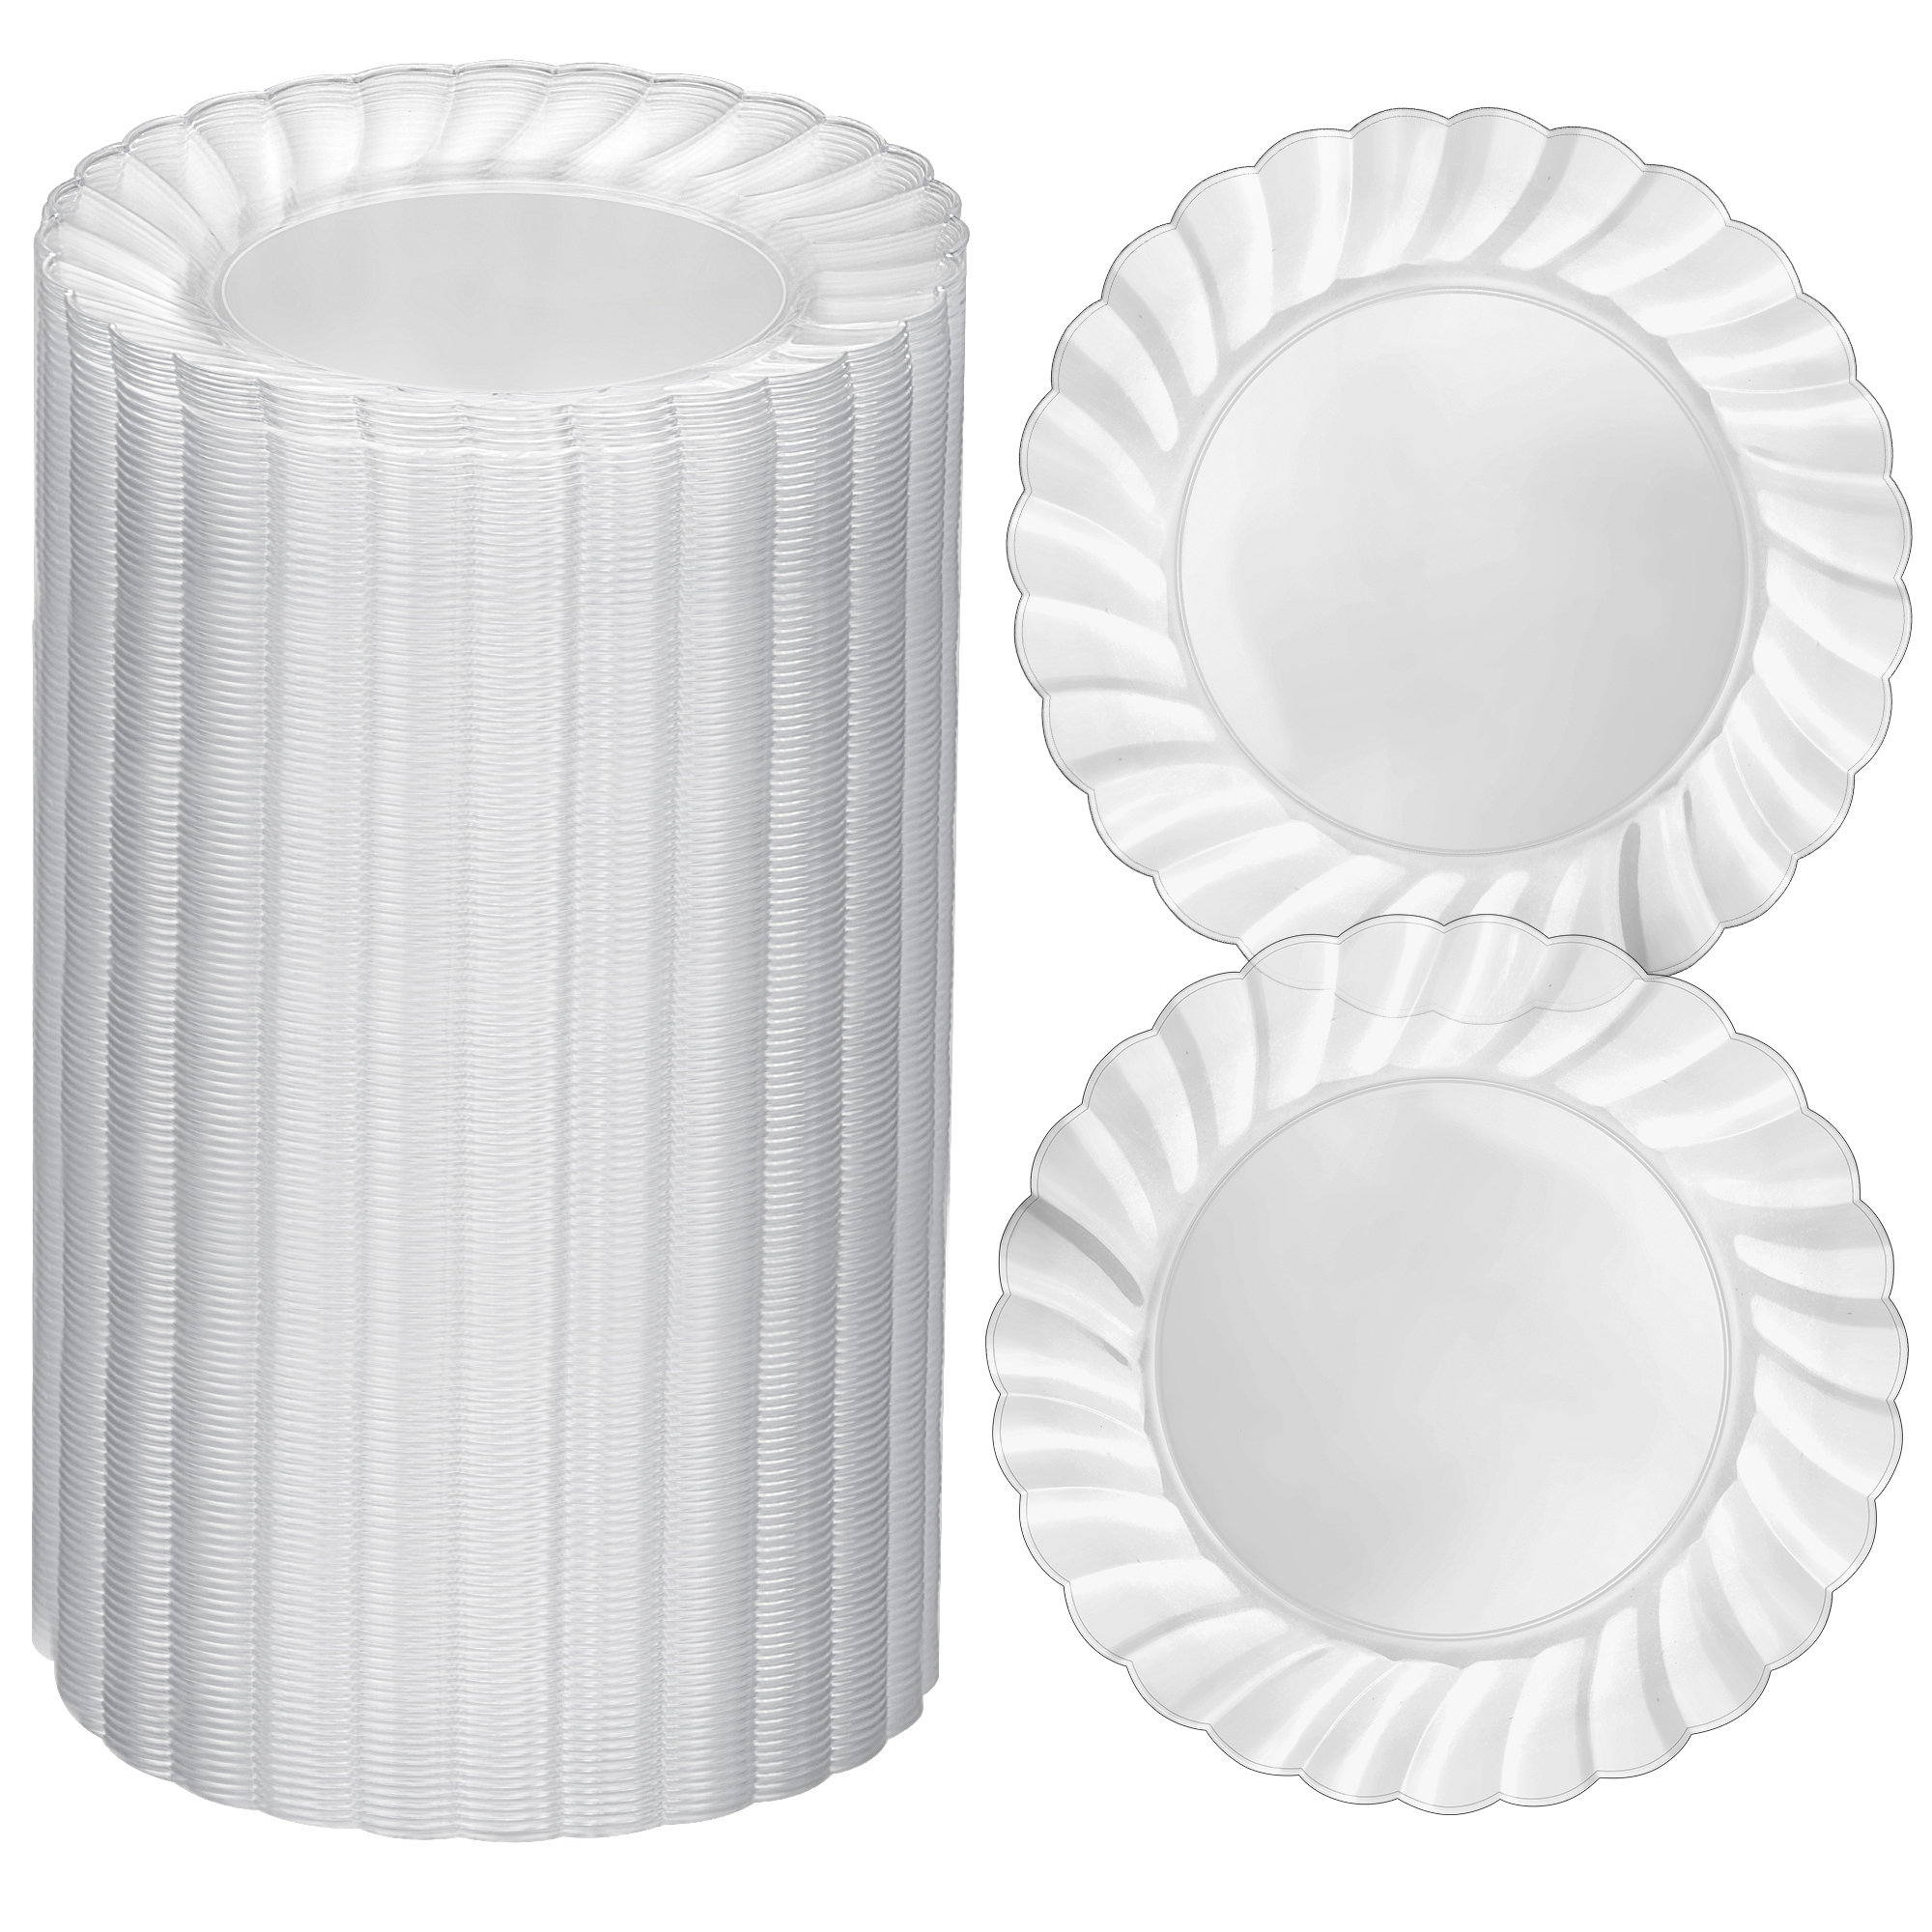 NOCCUR 100PCS White Plastic Plates-6.6inch Disposable Salad/Dessert  Plates-Premium Dessert Plates Disposable-Appetizer Plastic Plates - Plastic  Cake